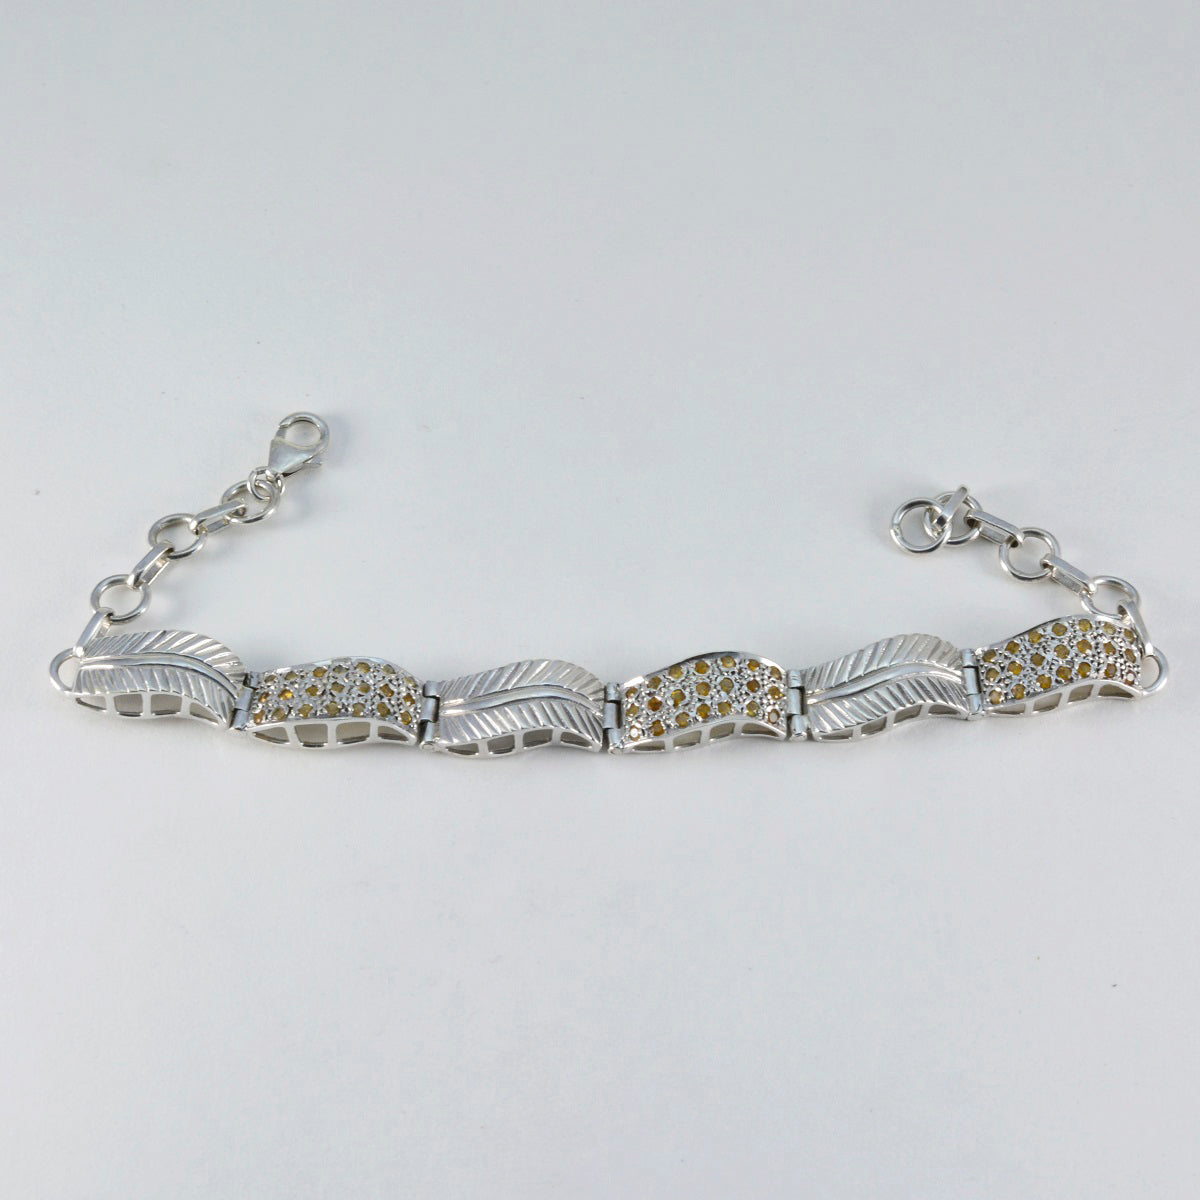 Riyo Indian 925 Sterling Silver Bracelet For Women Citrine Bracelet Bezel Setting Bracelet with Fish Hook Link Charm Bracelet L Size 6-8.5 Inch.